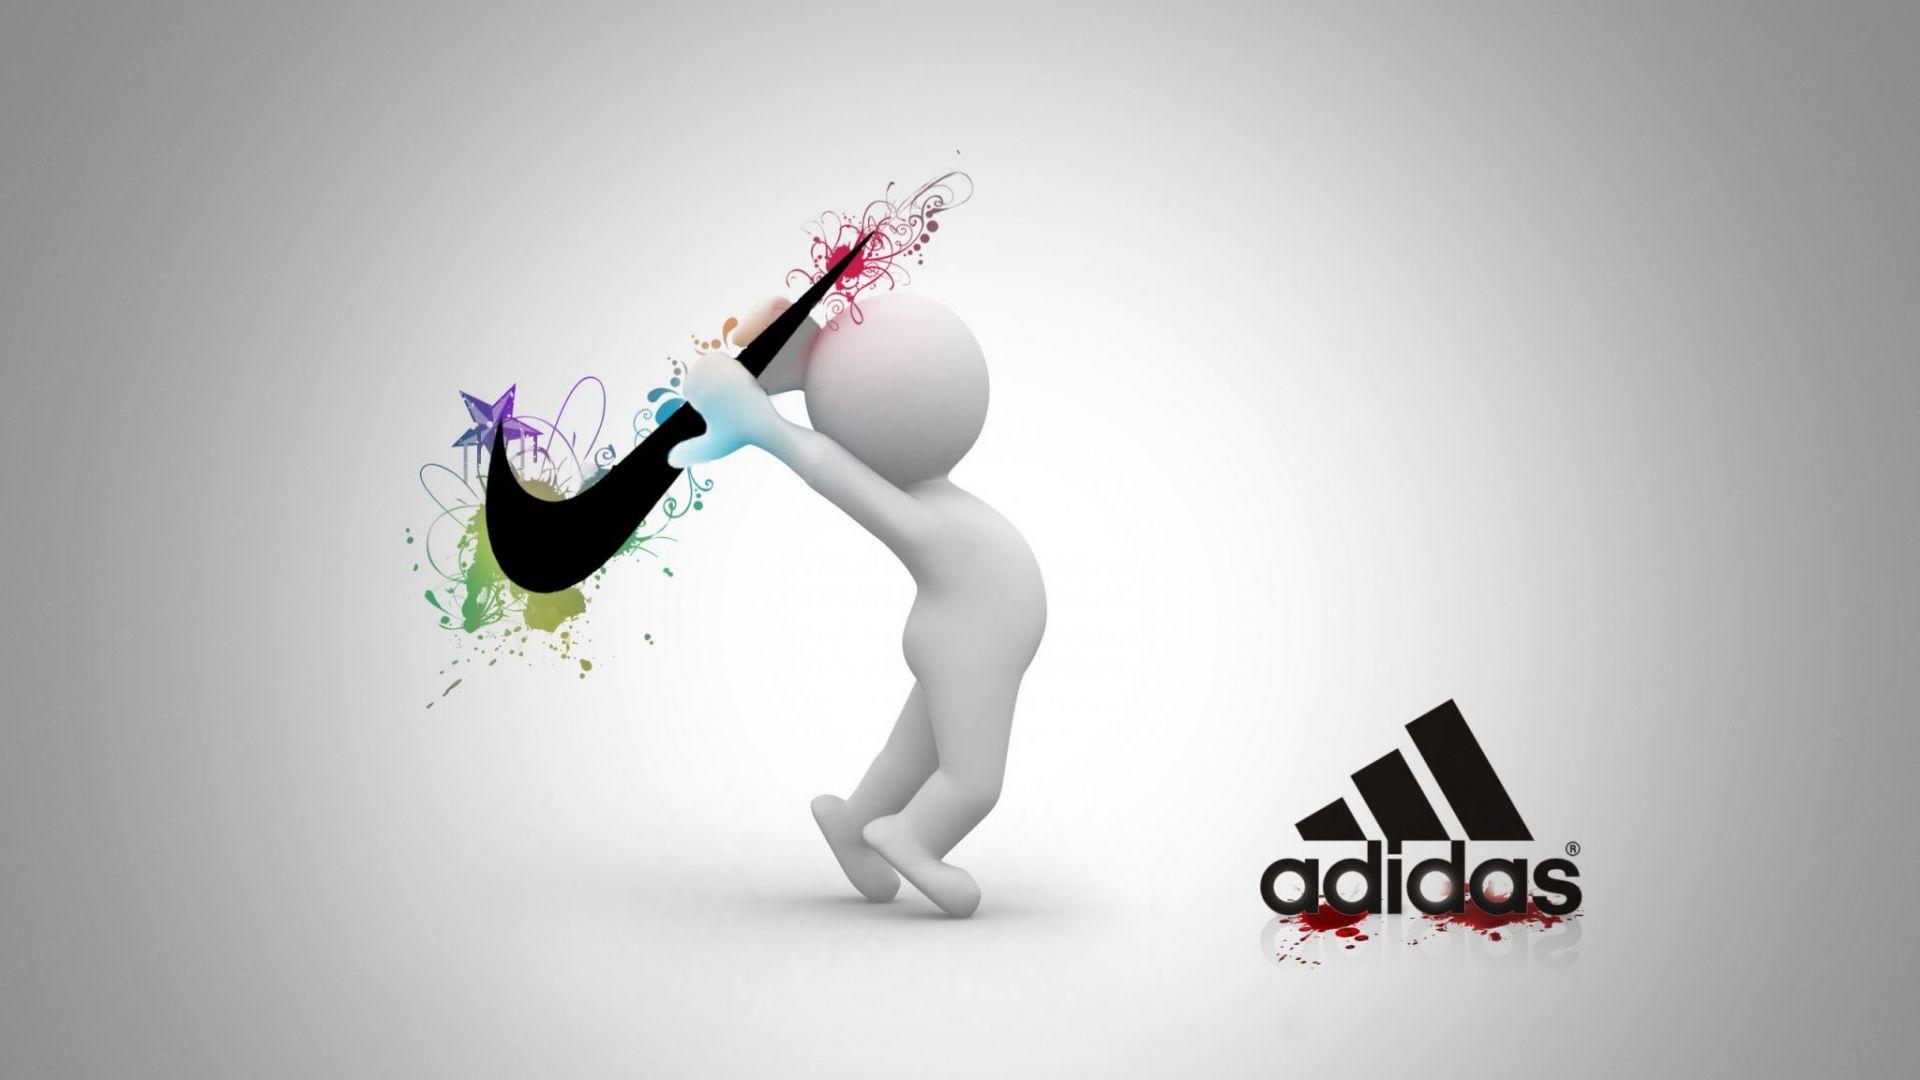 Nike Wallpaper Hd: Pin Nike Vs Adidas Image Wallpaper On